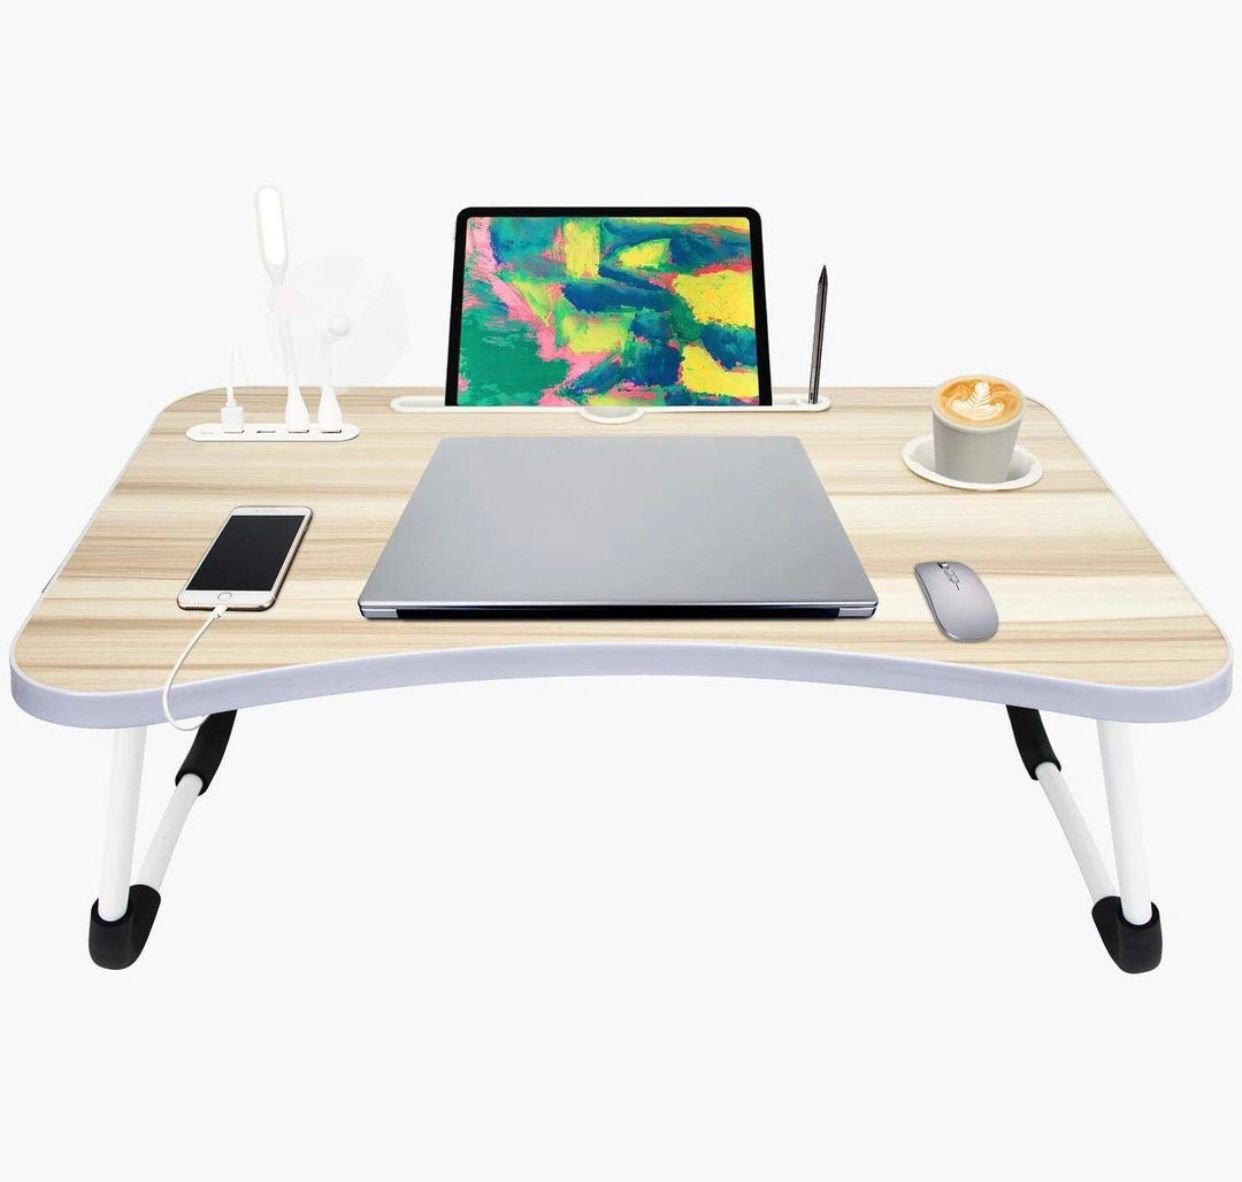 3USBport design foldable table